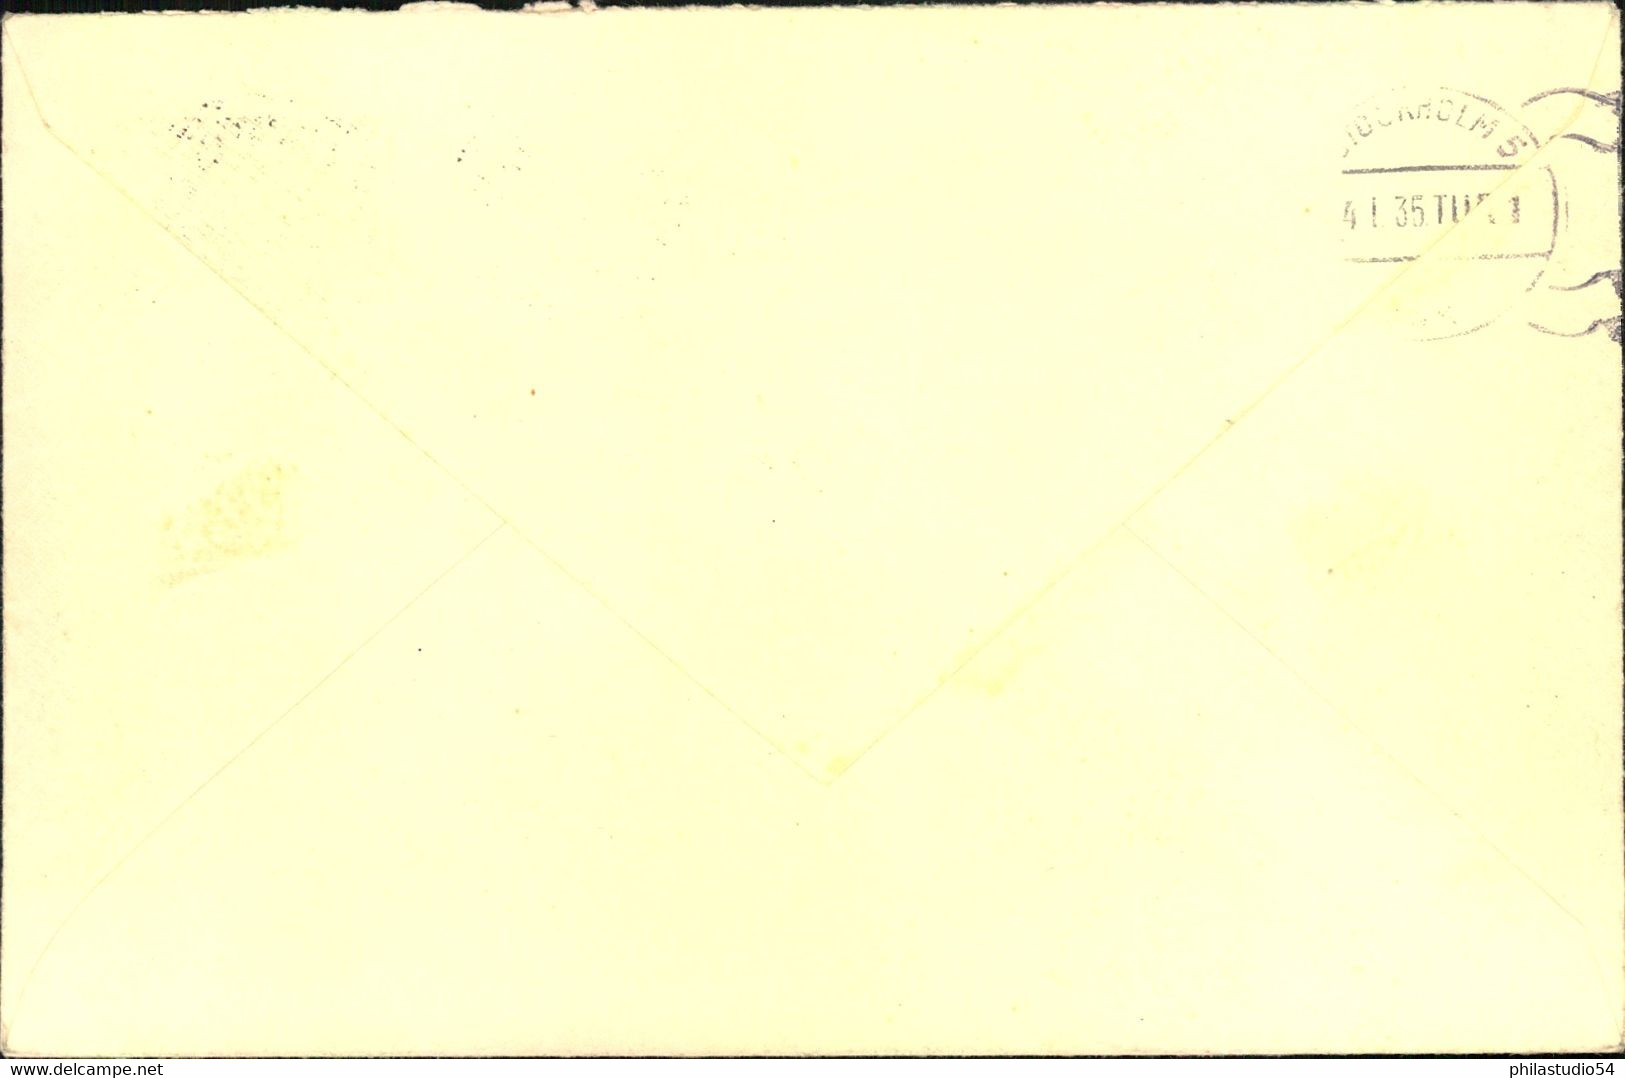 1935, Brief Mit Absender "SVENSKA BATALJONEN - SAAR" Nach Stockholm, Mit Ankunftsstempel - Storia Postale